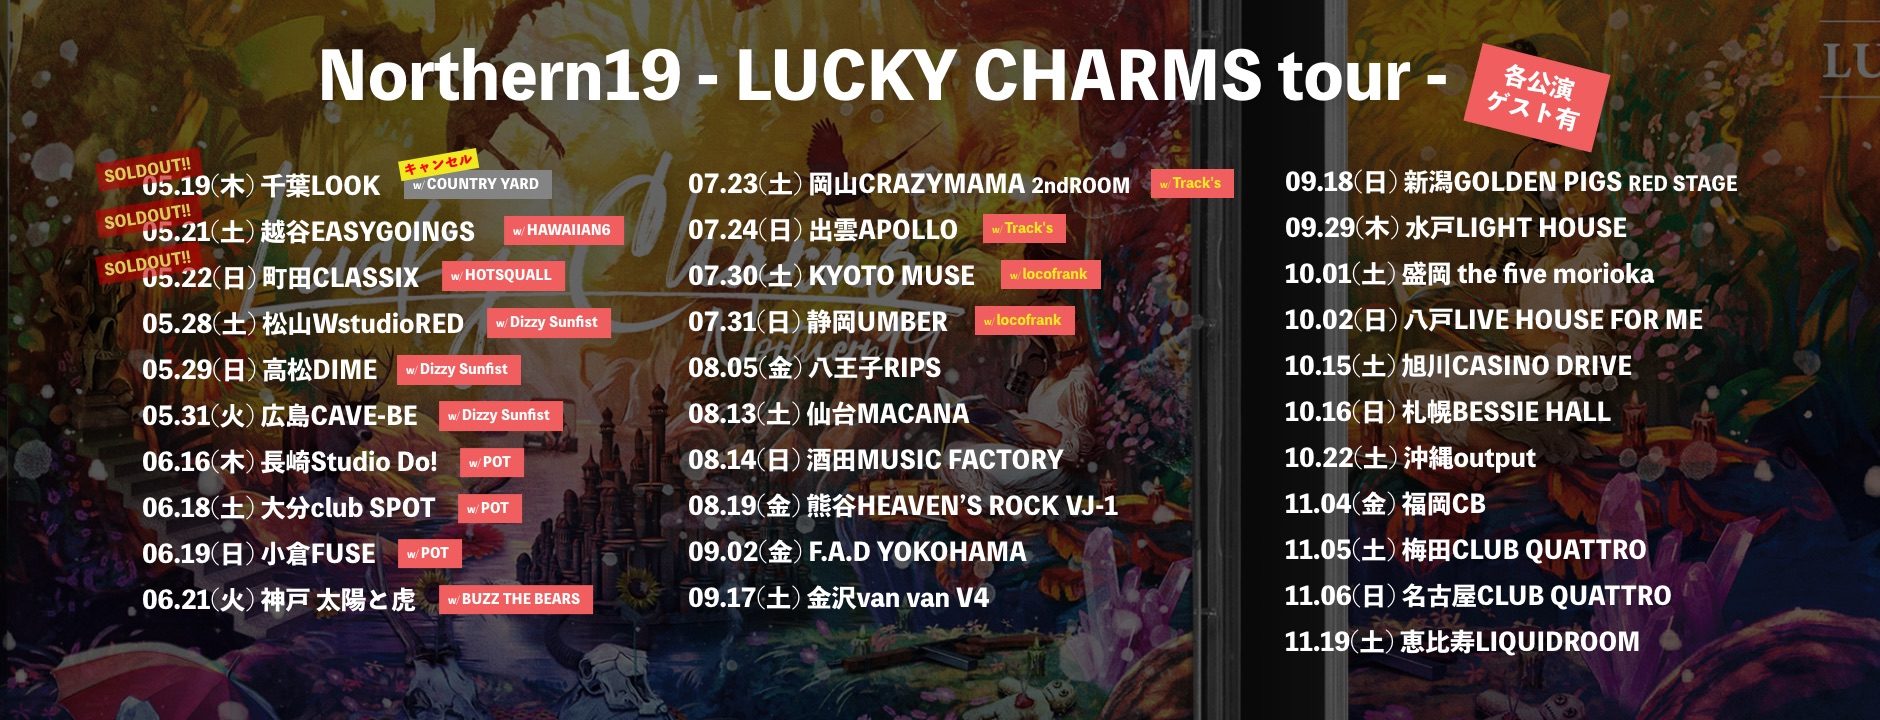 LUCKY CHARMS tour